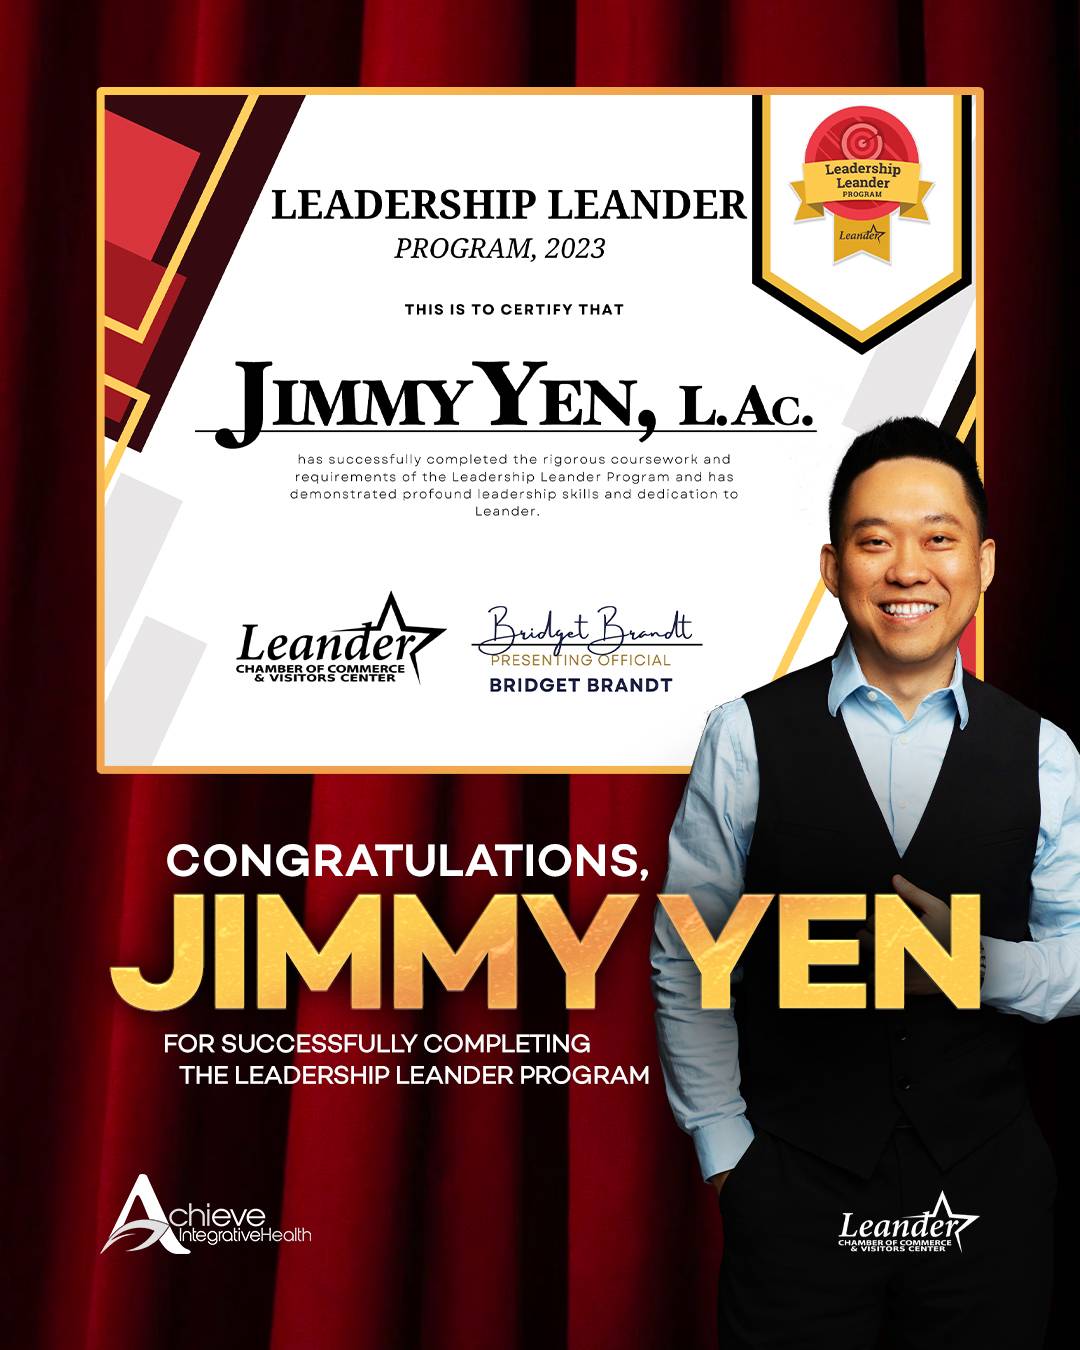 Achieve Integrative Health congratulates Jimmy Yen for completing the Leander Leadership Program